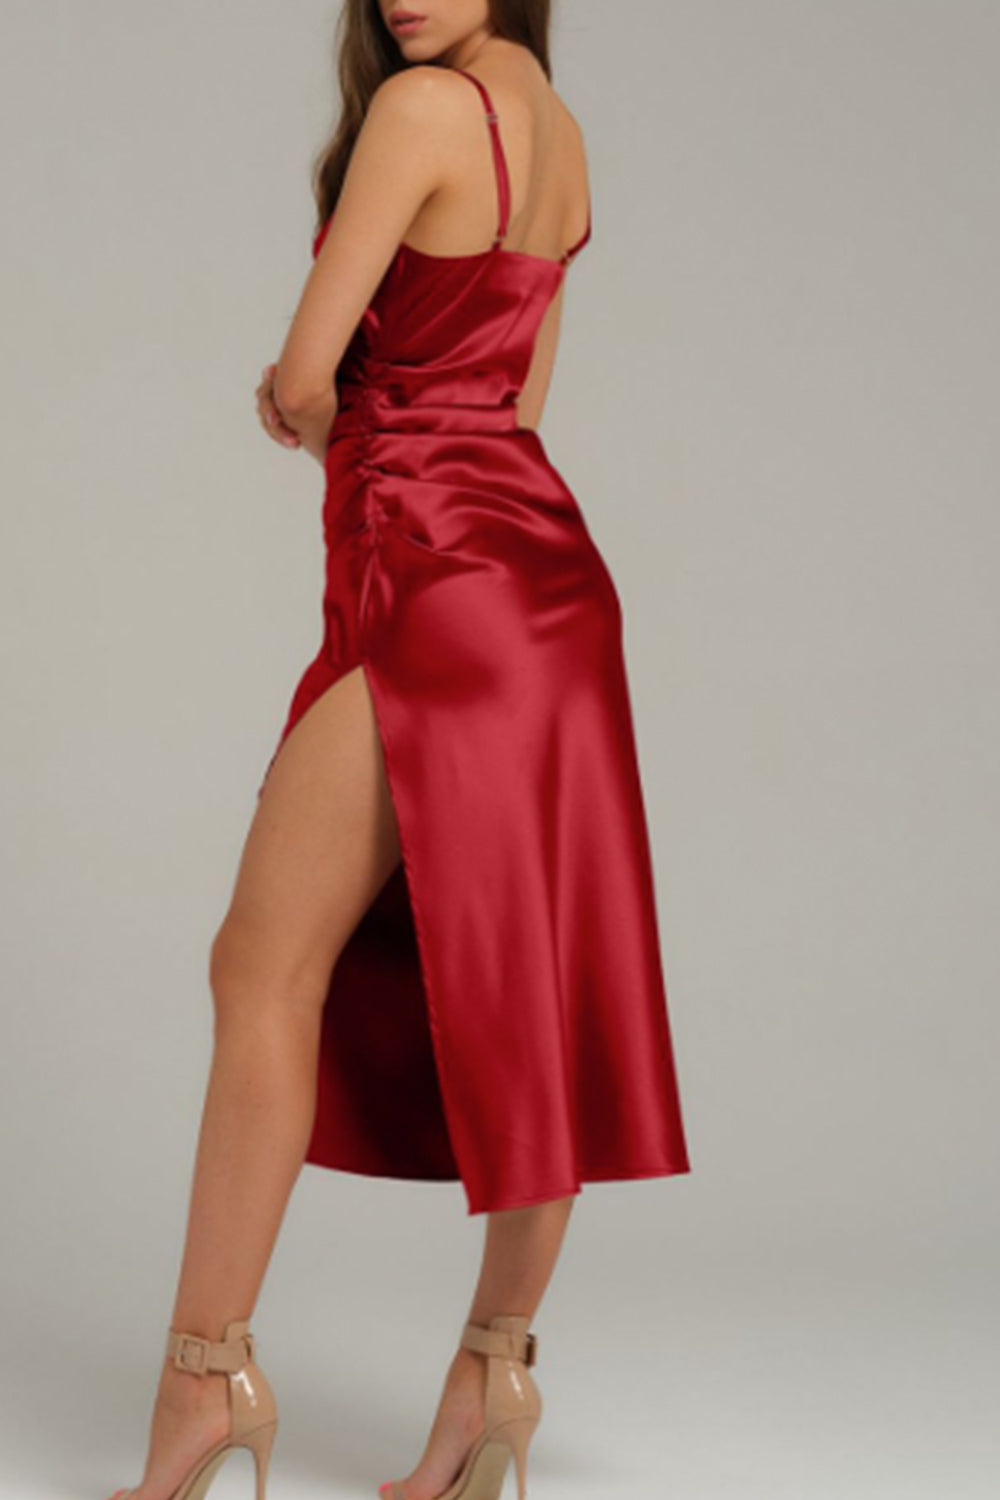 Make This Christmas Season A Very Rouge One Like Deepika Padukone | Red  bodycon dress, White bodycon dress, Red cocktail dress